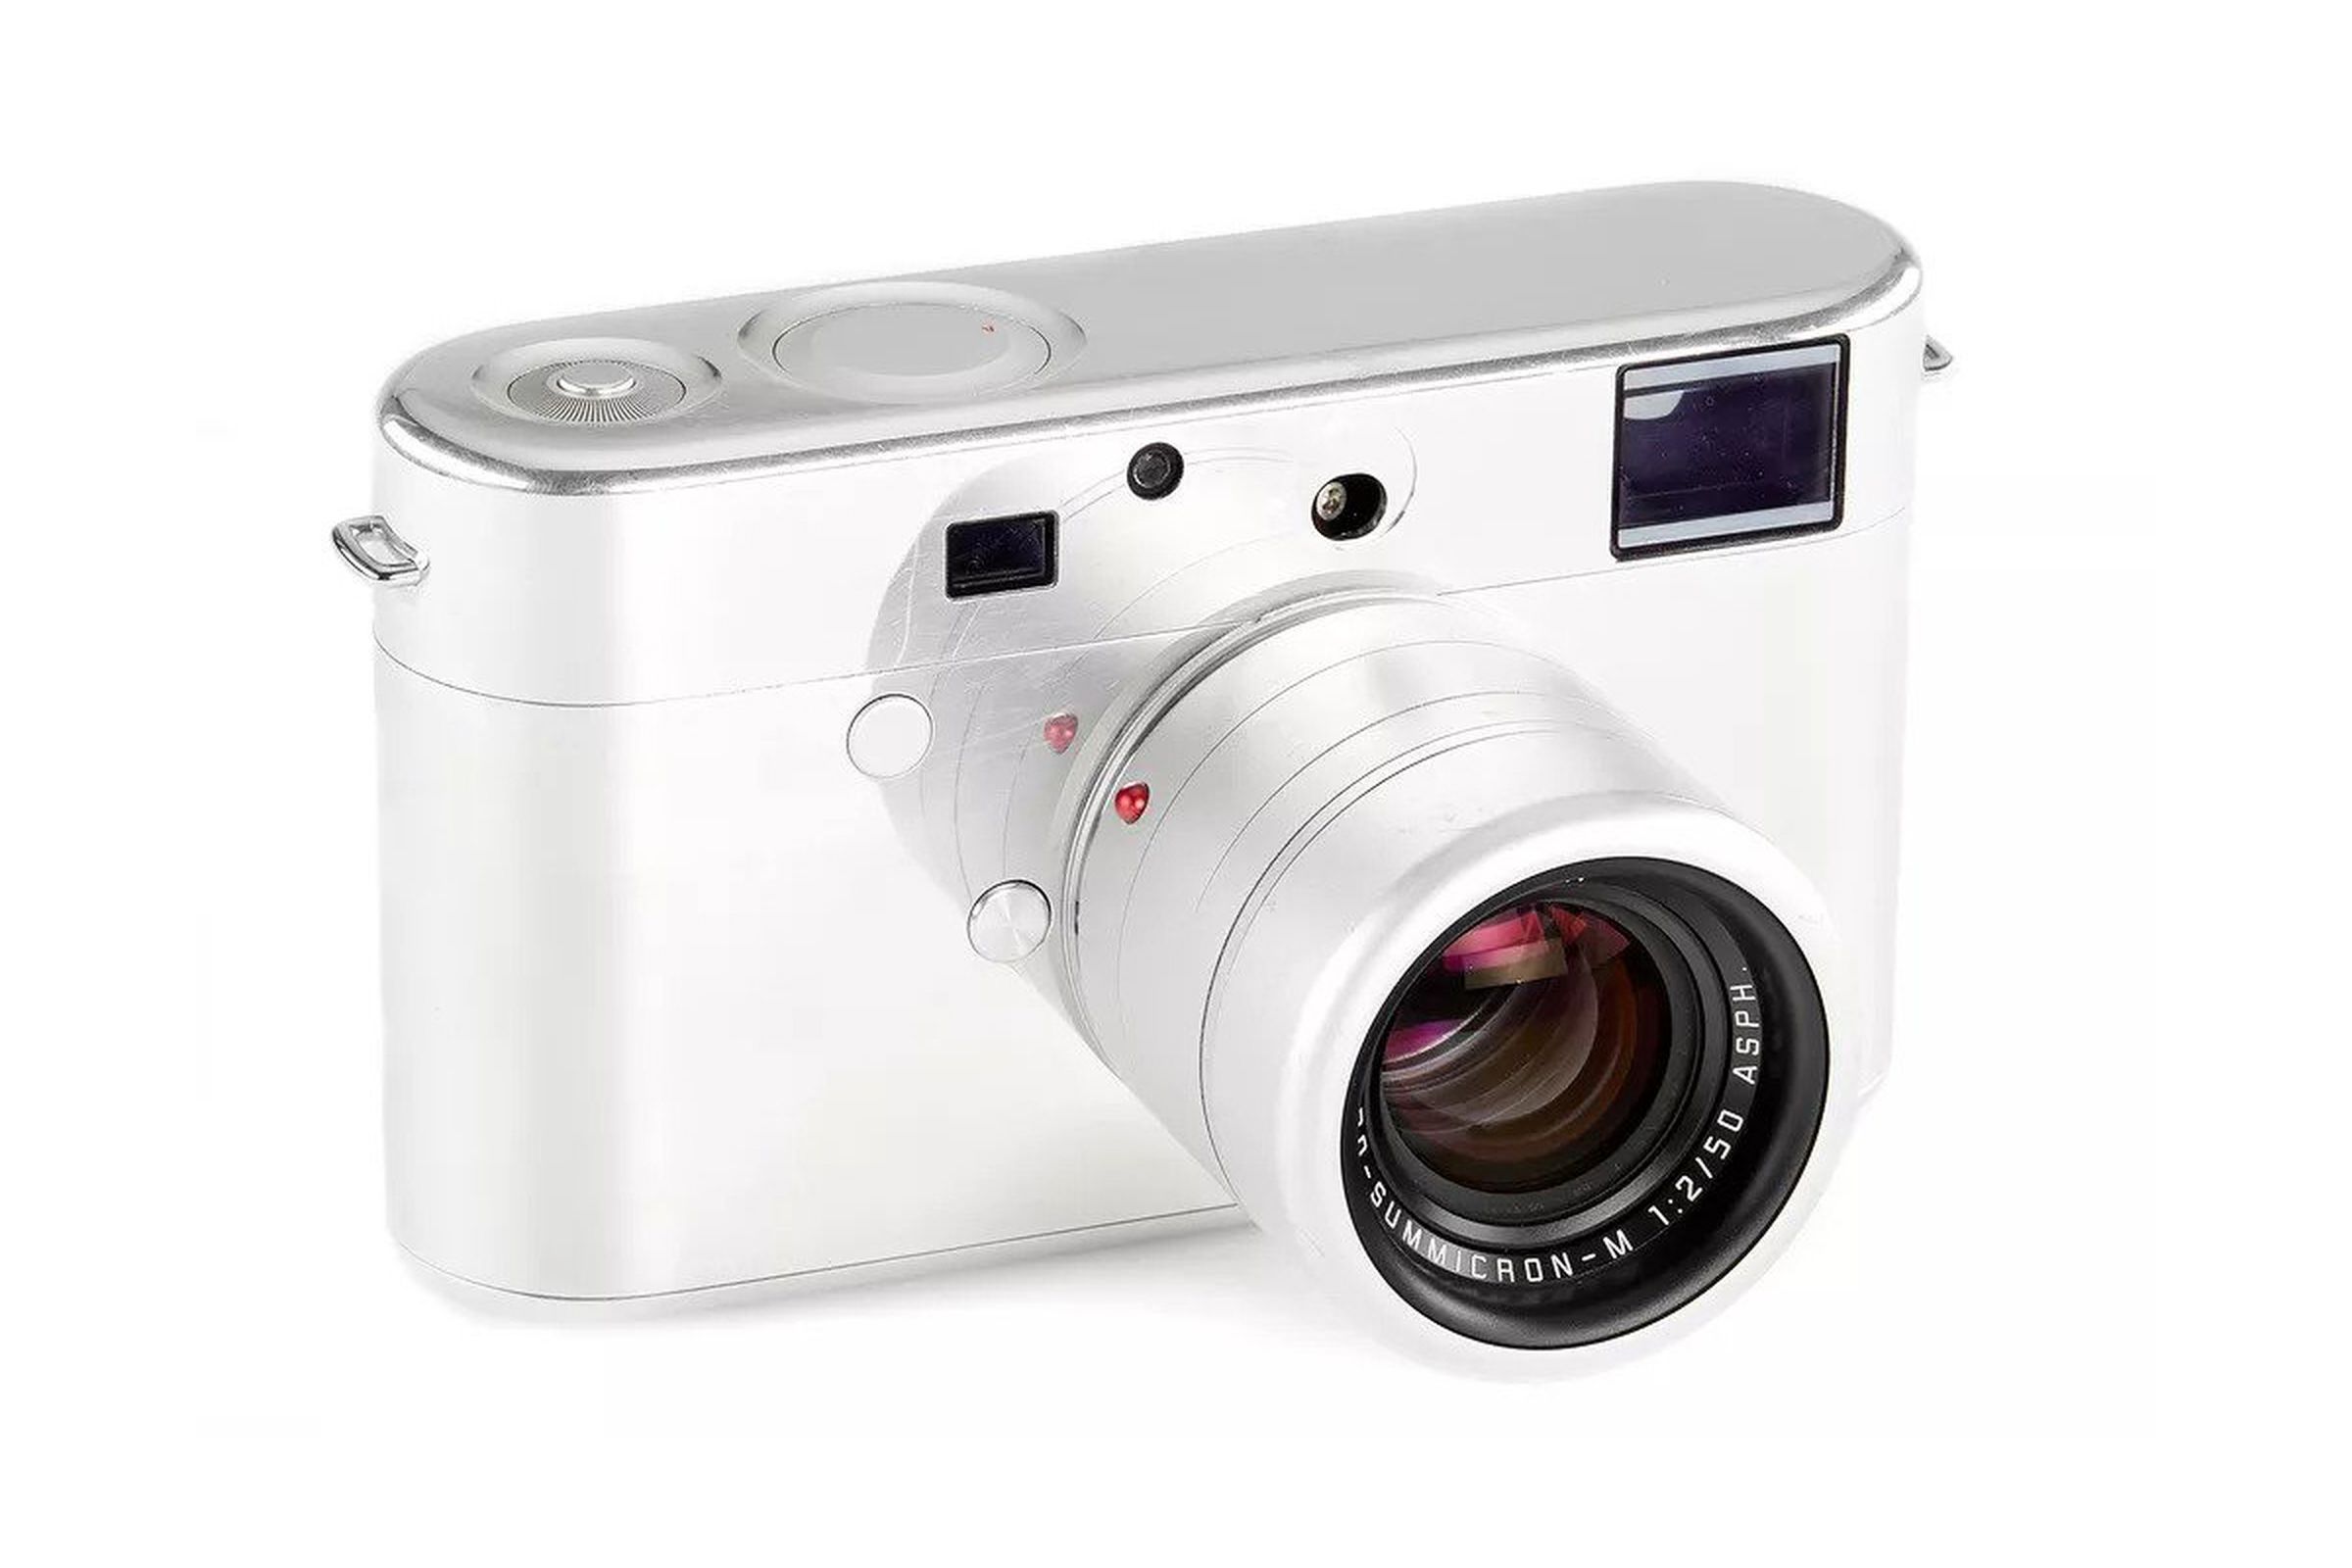 The prototype Leica camera.